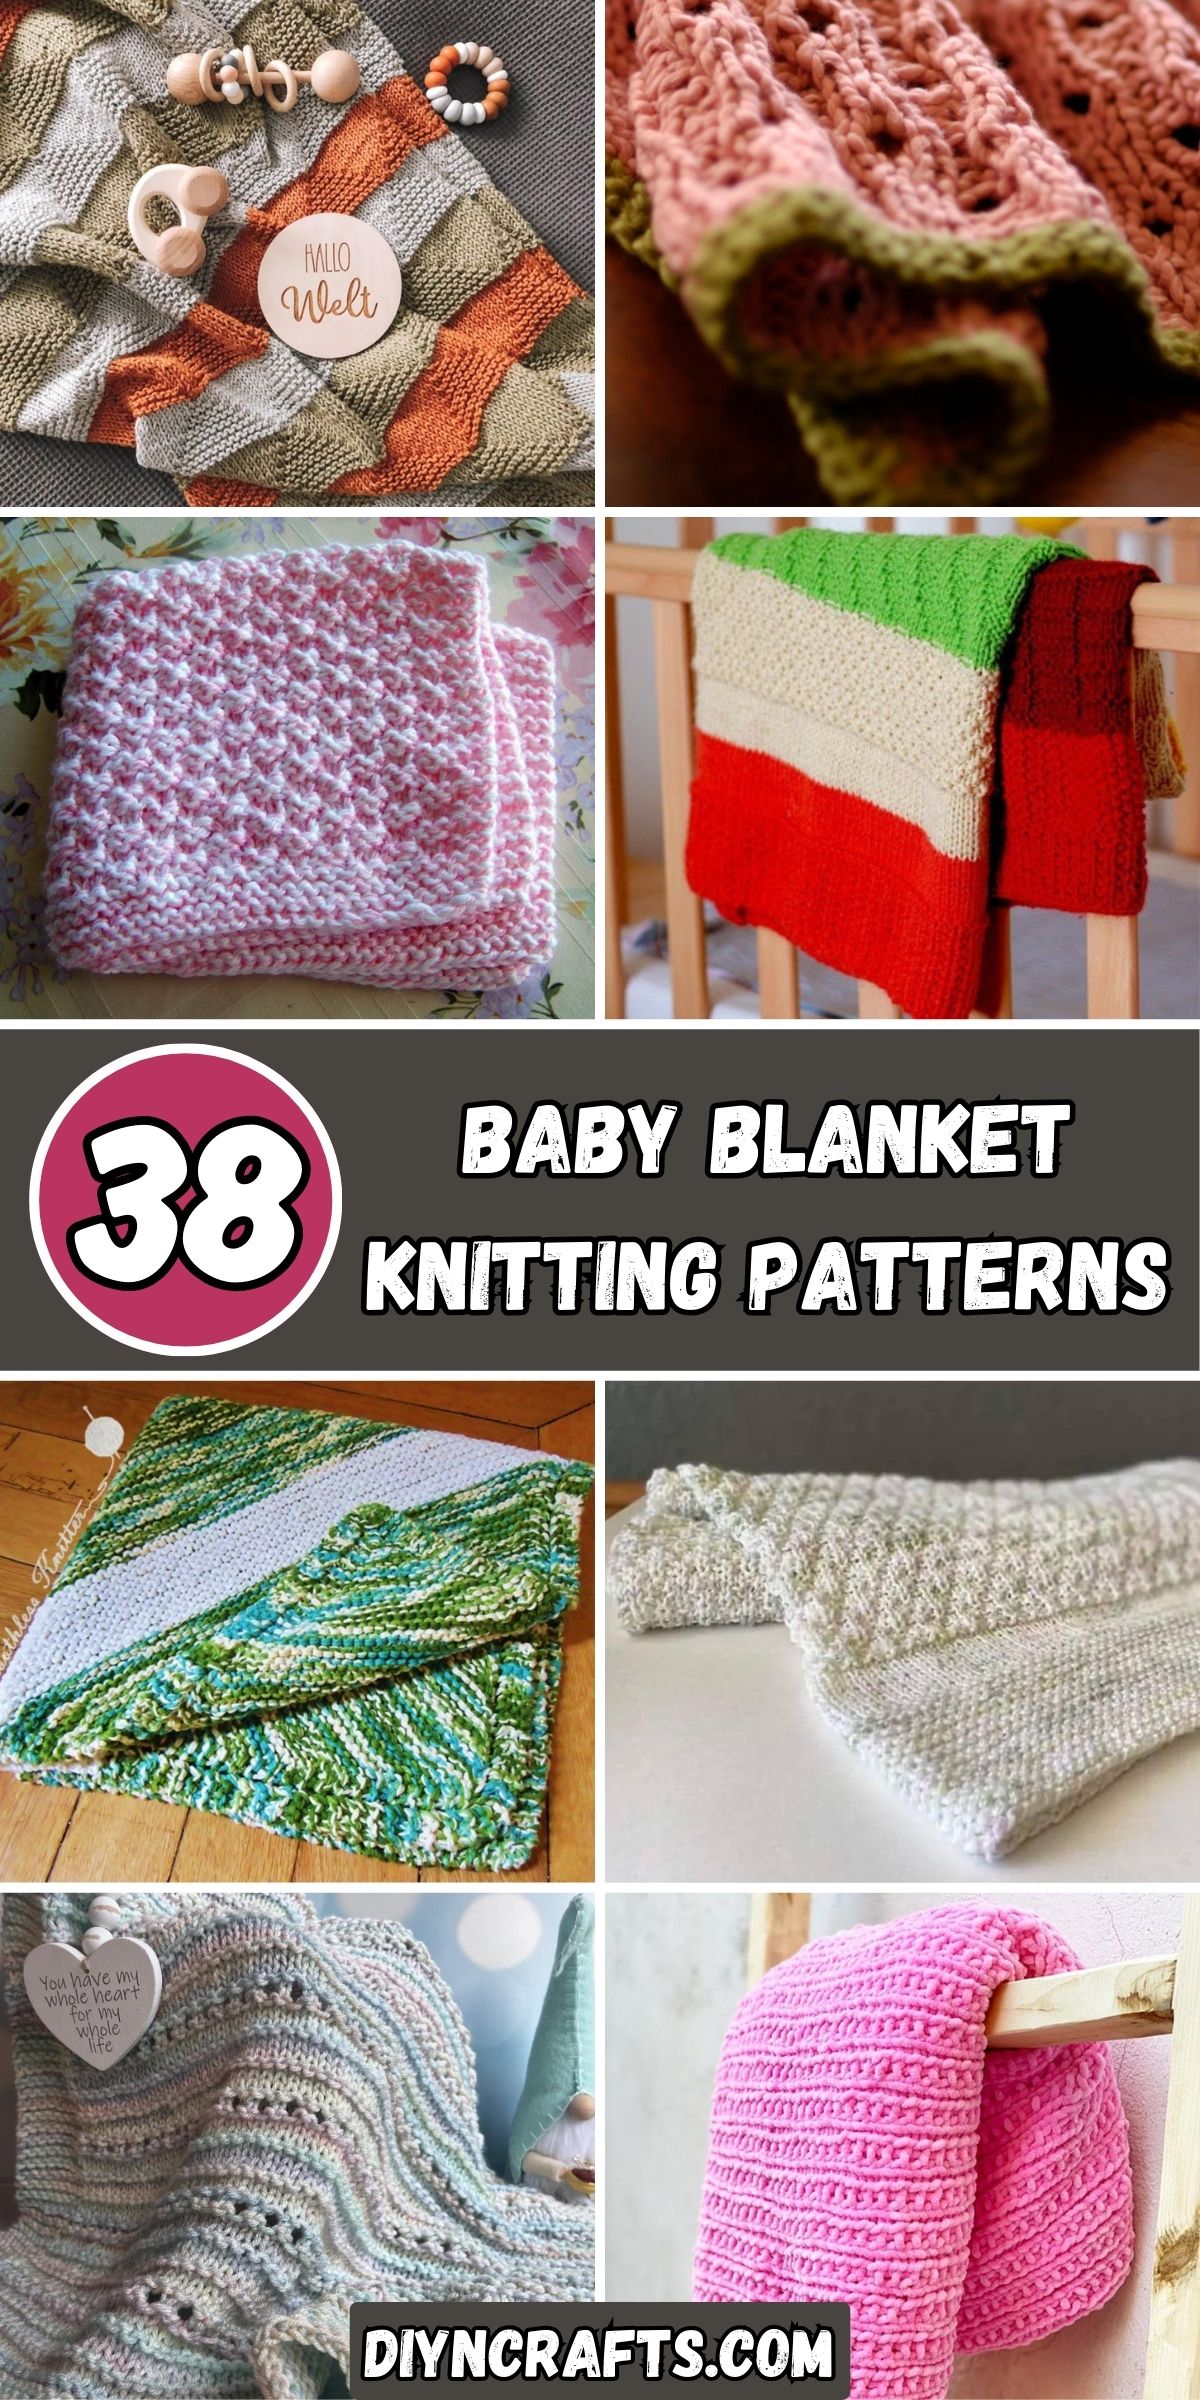 38 Baby Blanket Knitting Patterns collage.